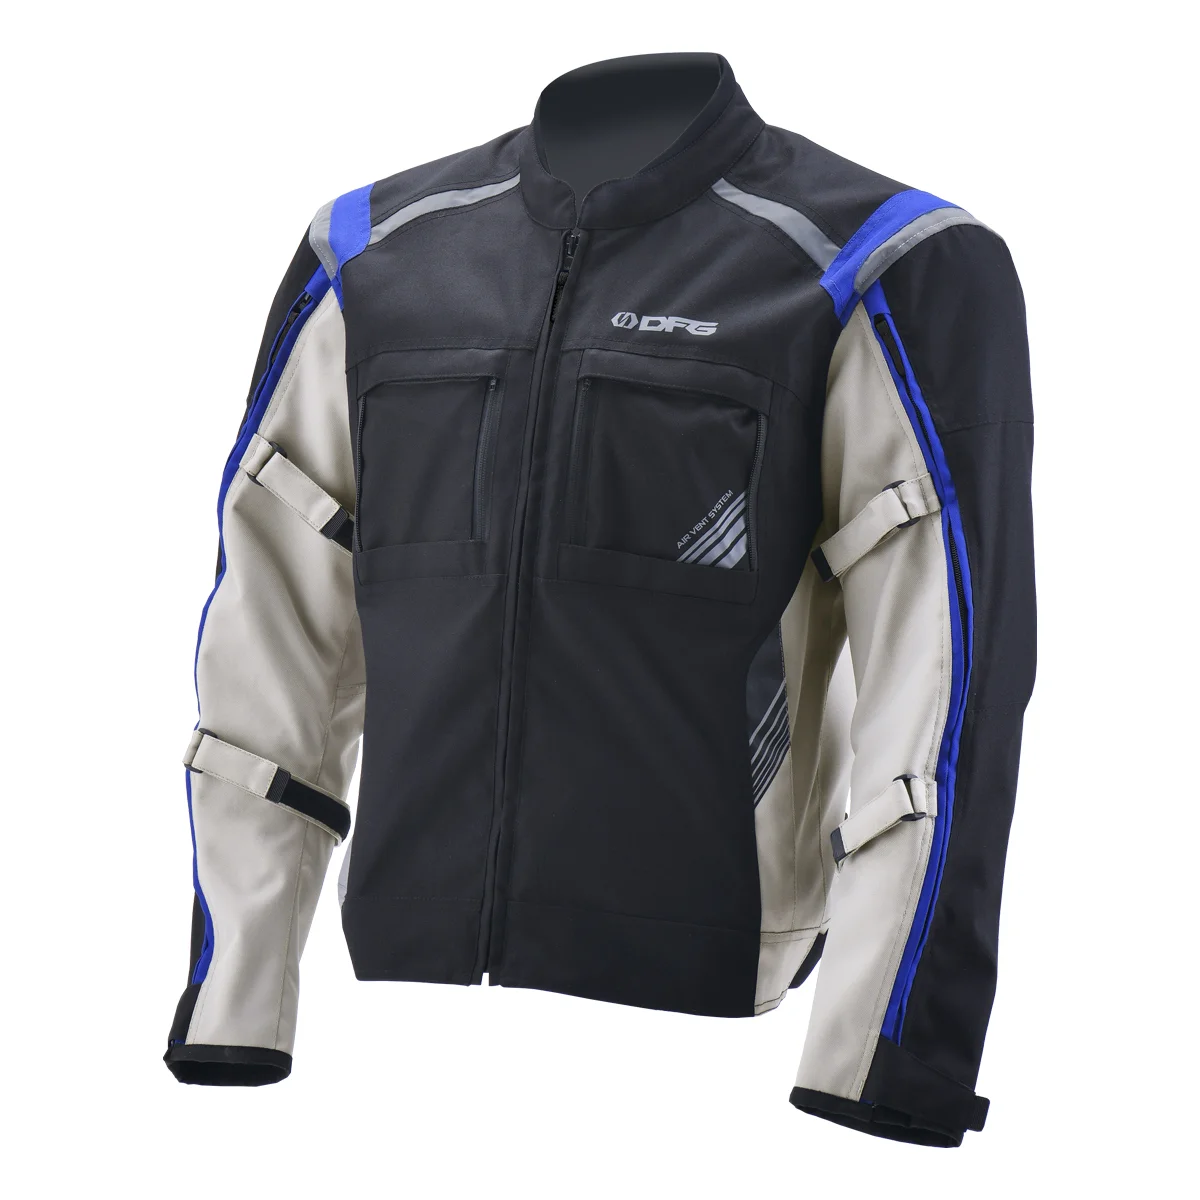 DFG ナビゲーター クールジャケット ブラック/ブルー| Dirtbikeplus (ダートバイクプラス)